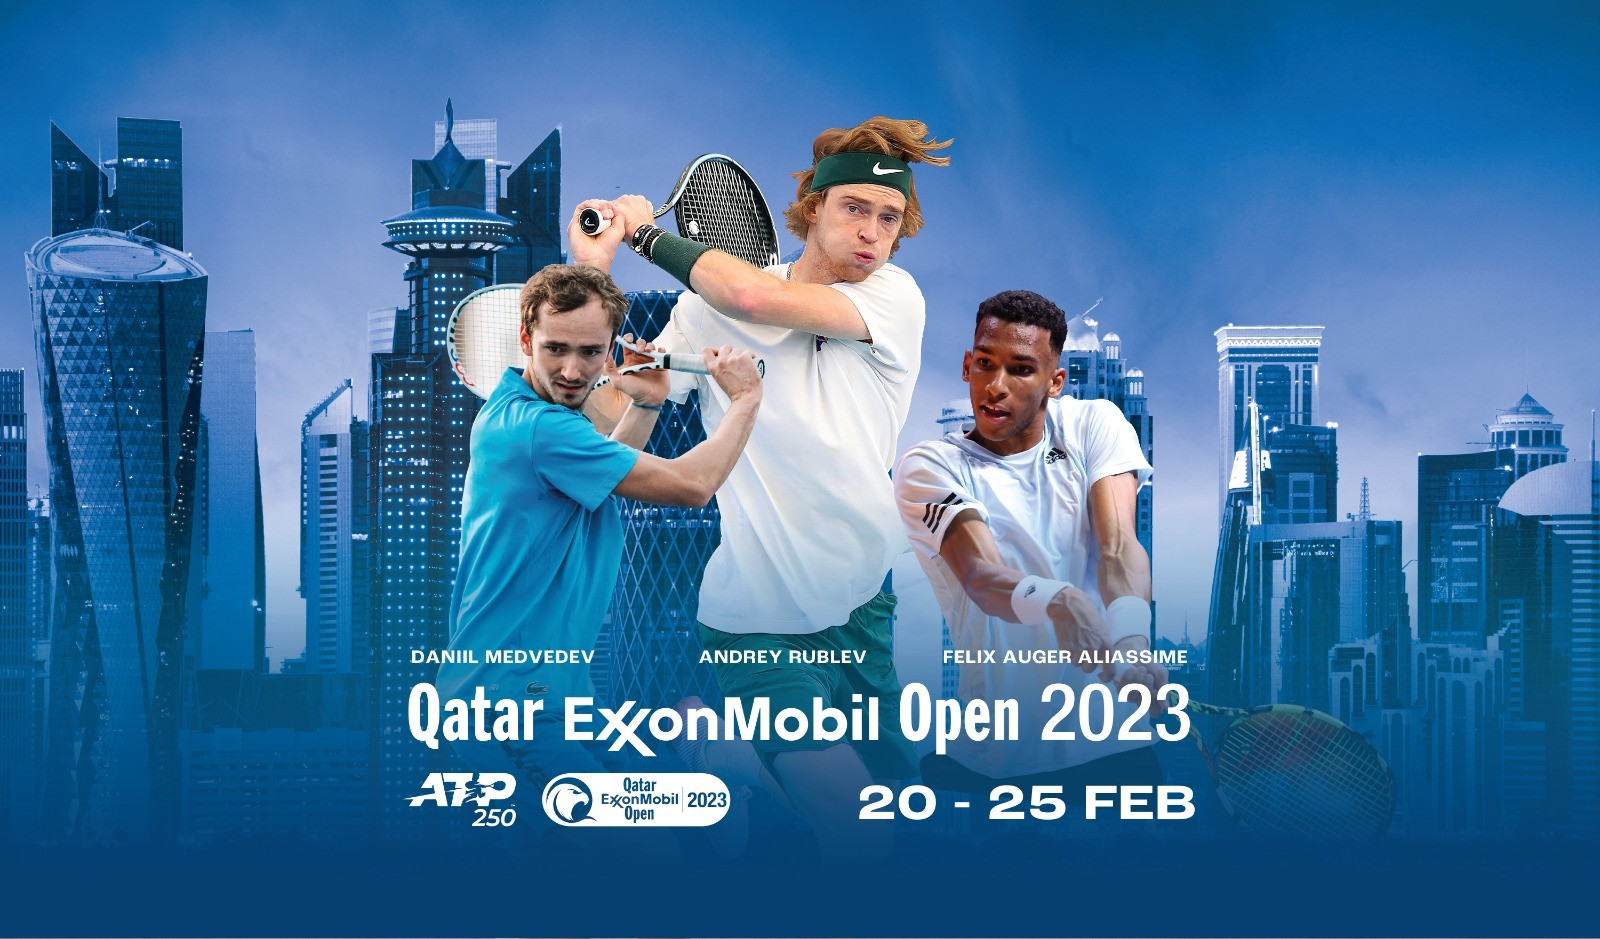 Qatar ExxonMobil Open 2023 Qatar Events